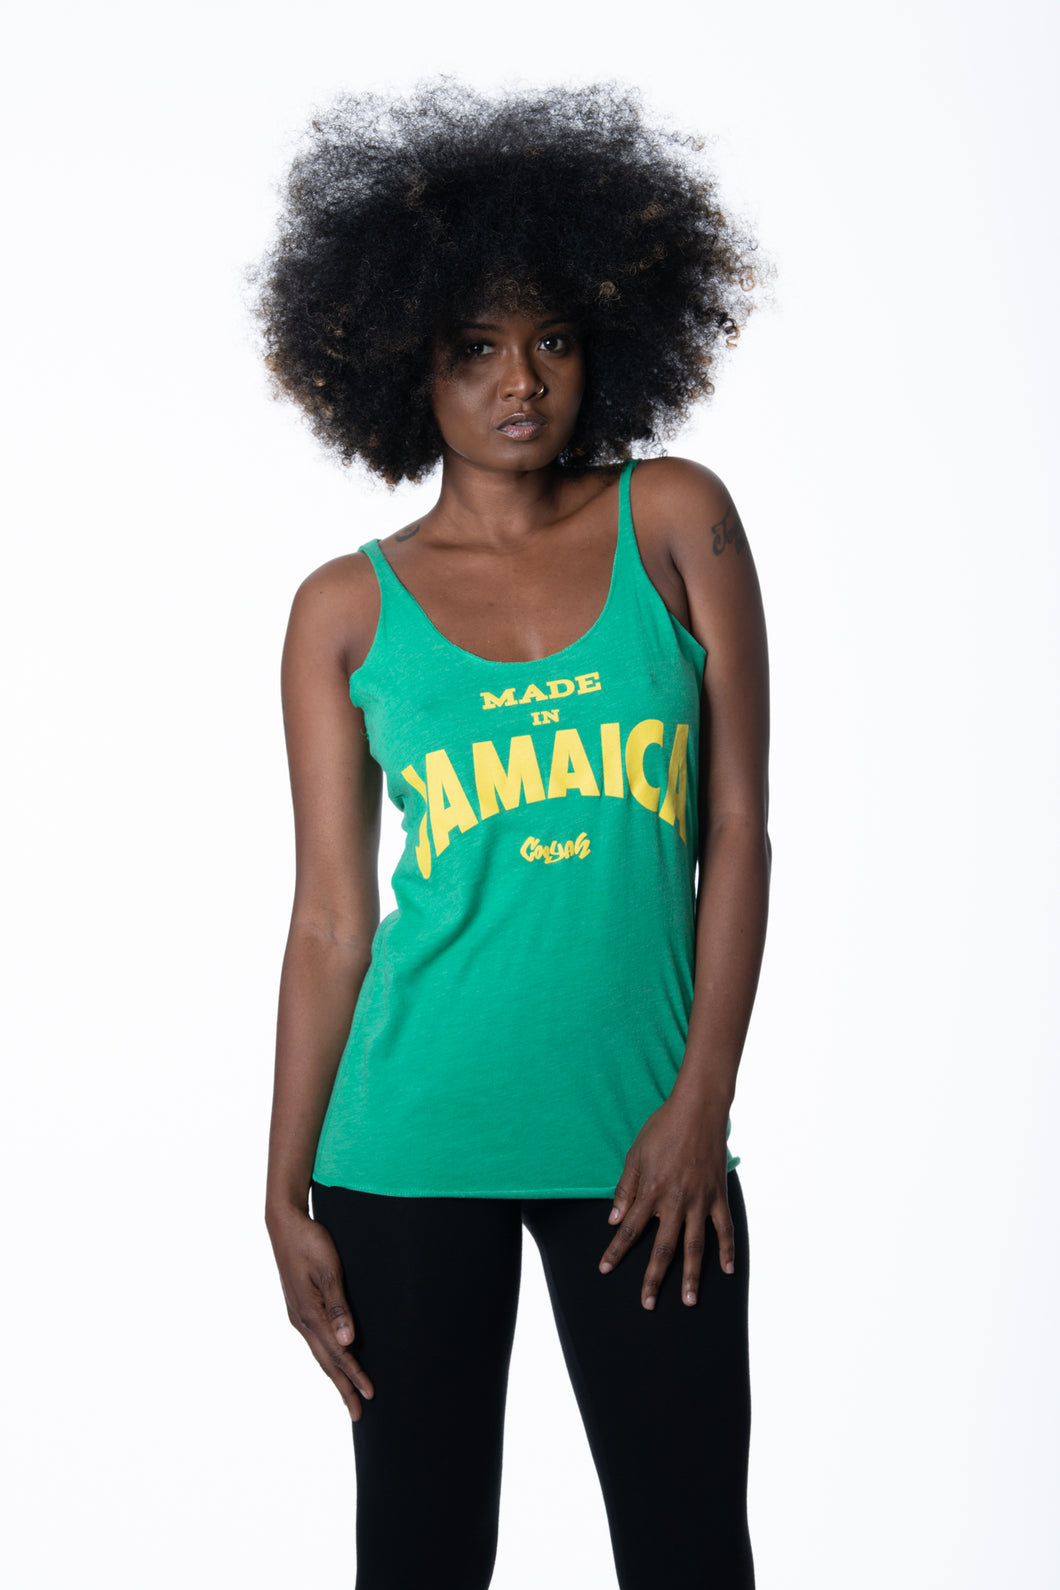 Cooyah Clothing. Made in Jamaica women's tank top. Jamaican reggae clothing brand.